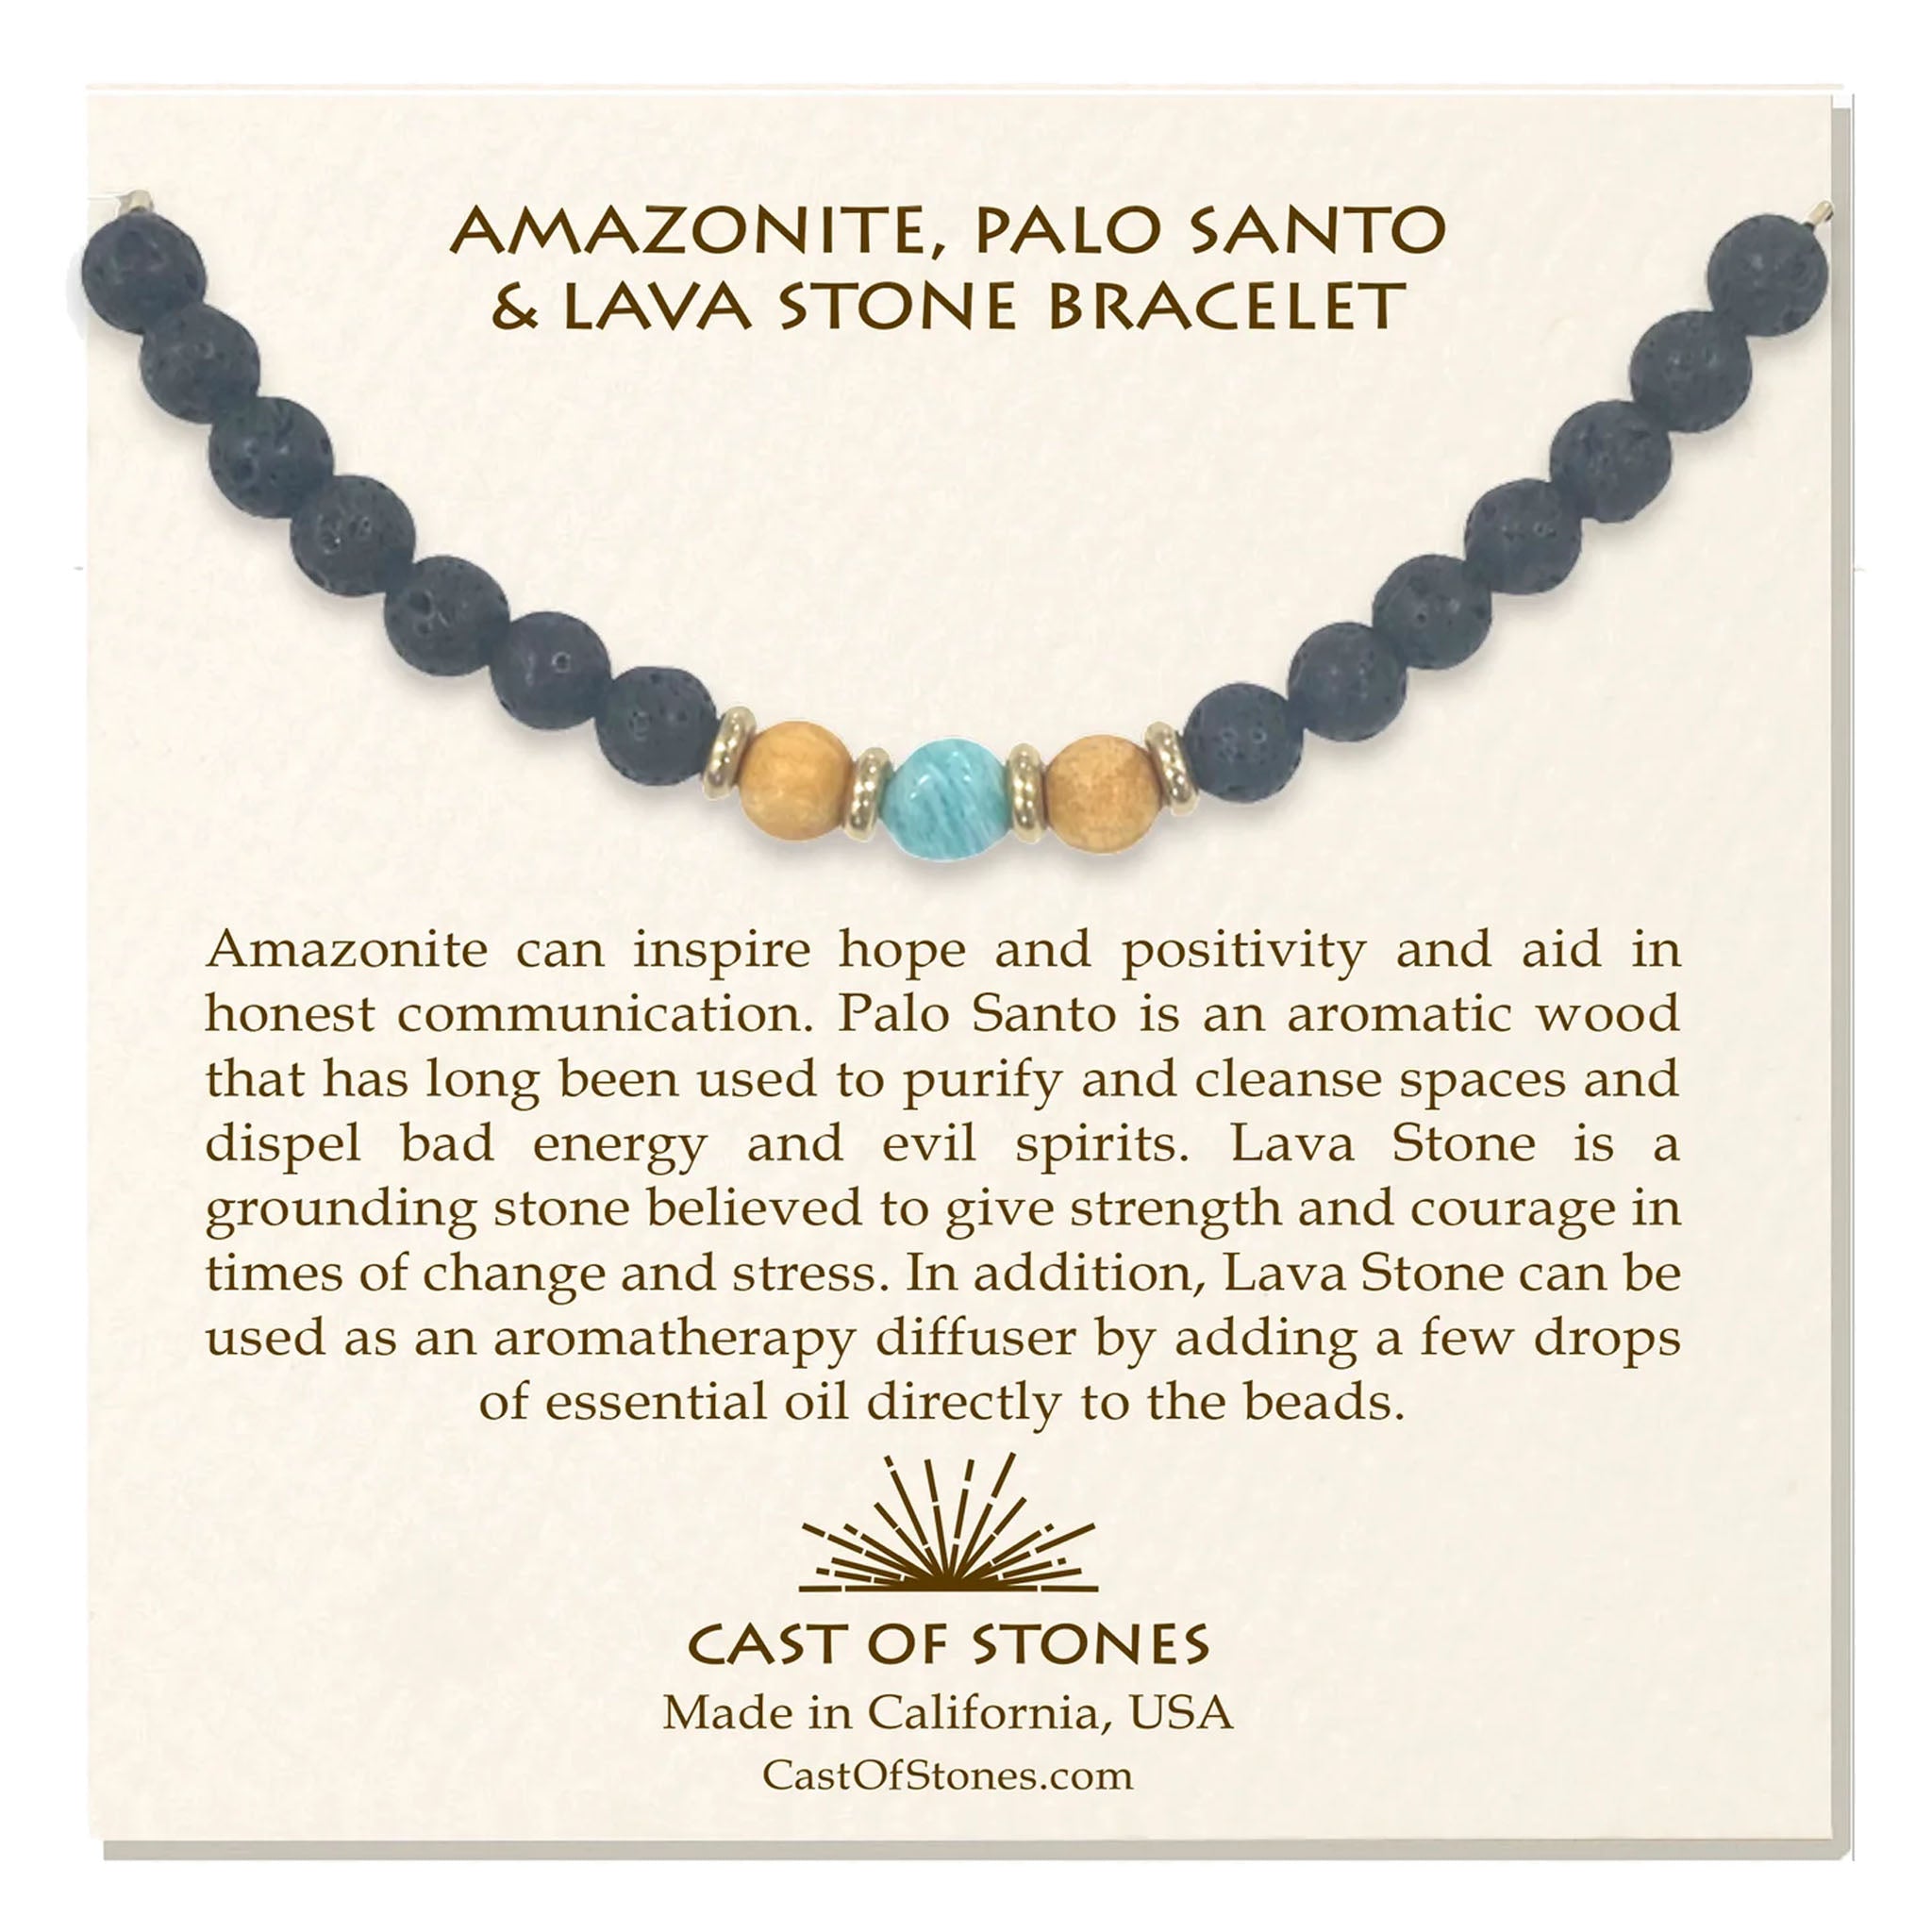 Amazonite, Palo Santo, & Lava Stone Bracelet